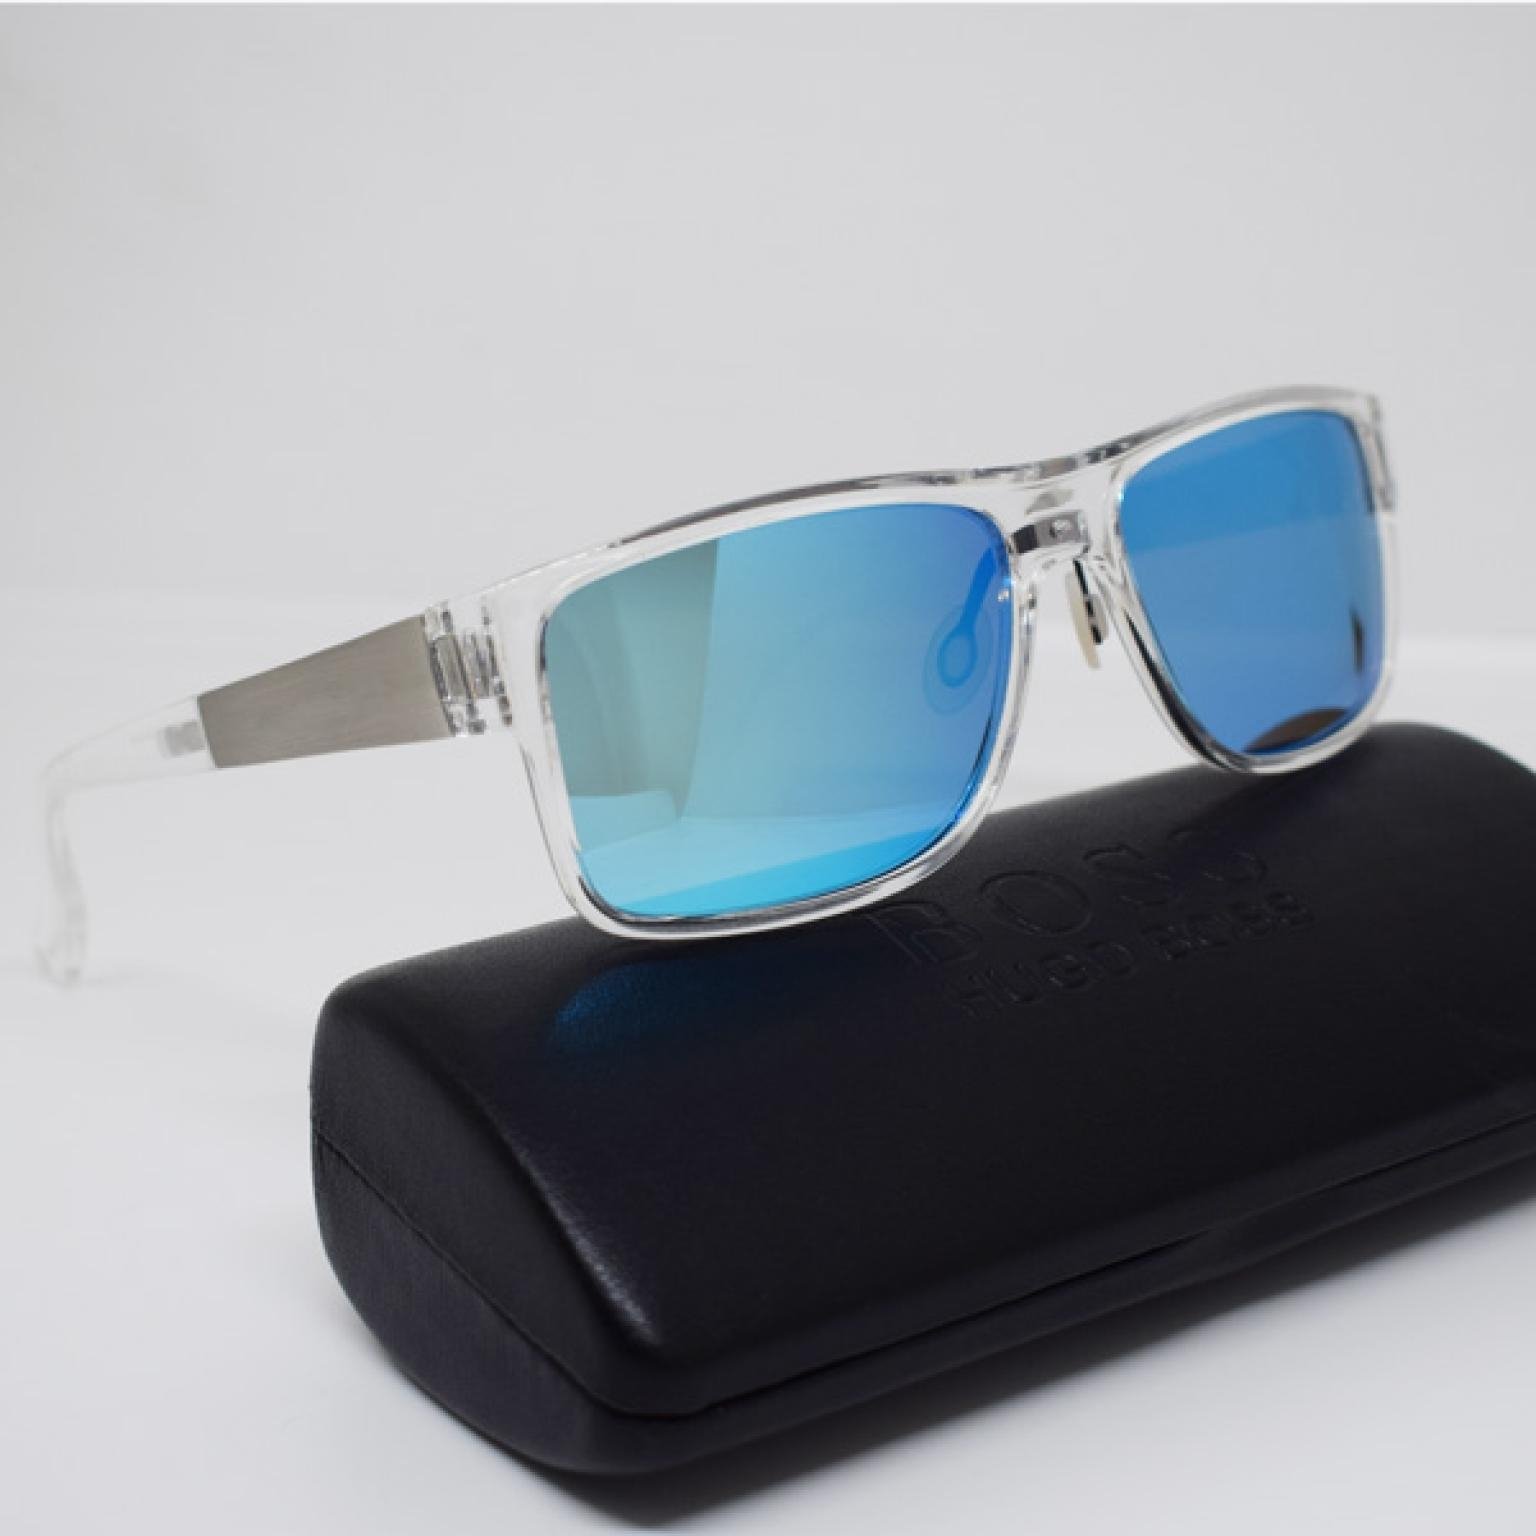 High Quality Polarized Rectangular Transparent Blue Mercury Stylish Premium Sunglass For Men Women Uv400 Protected With Transparent frame